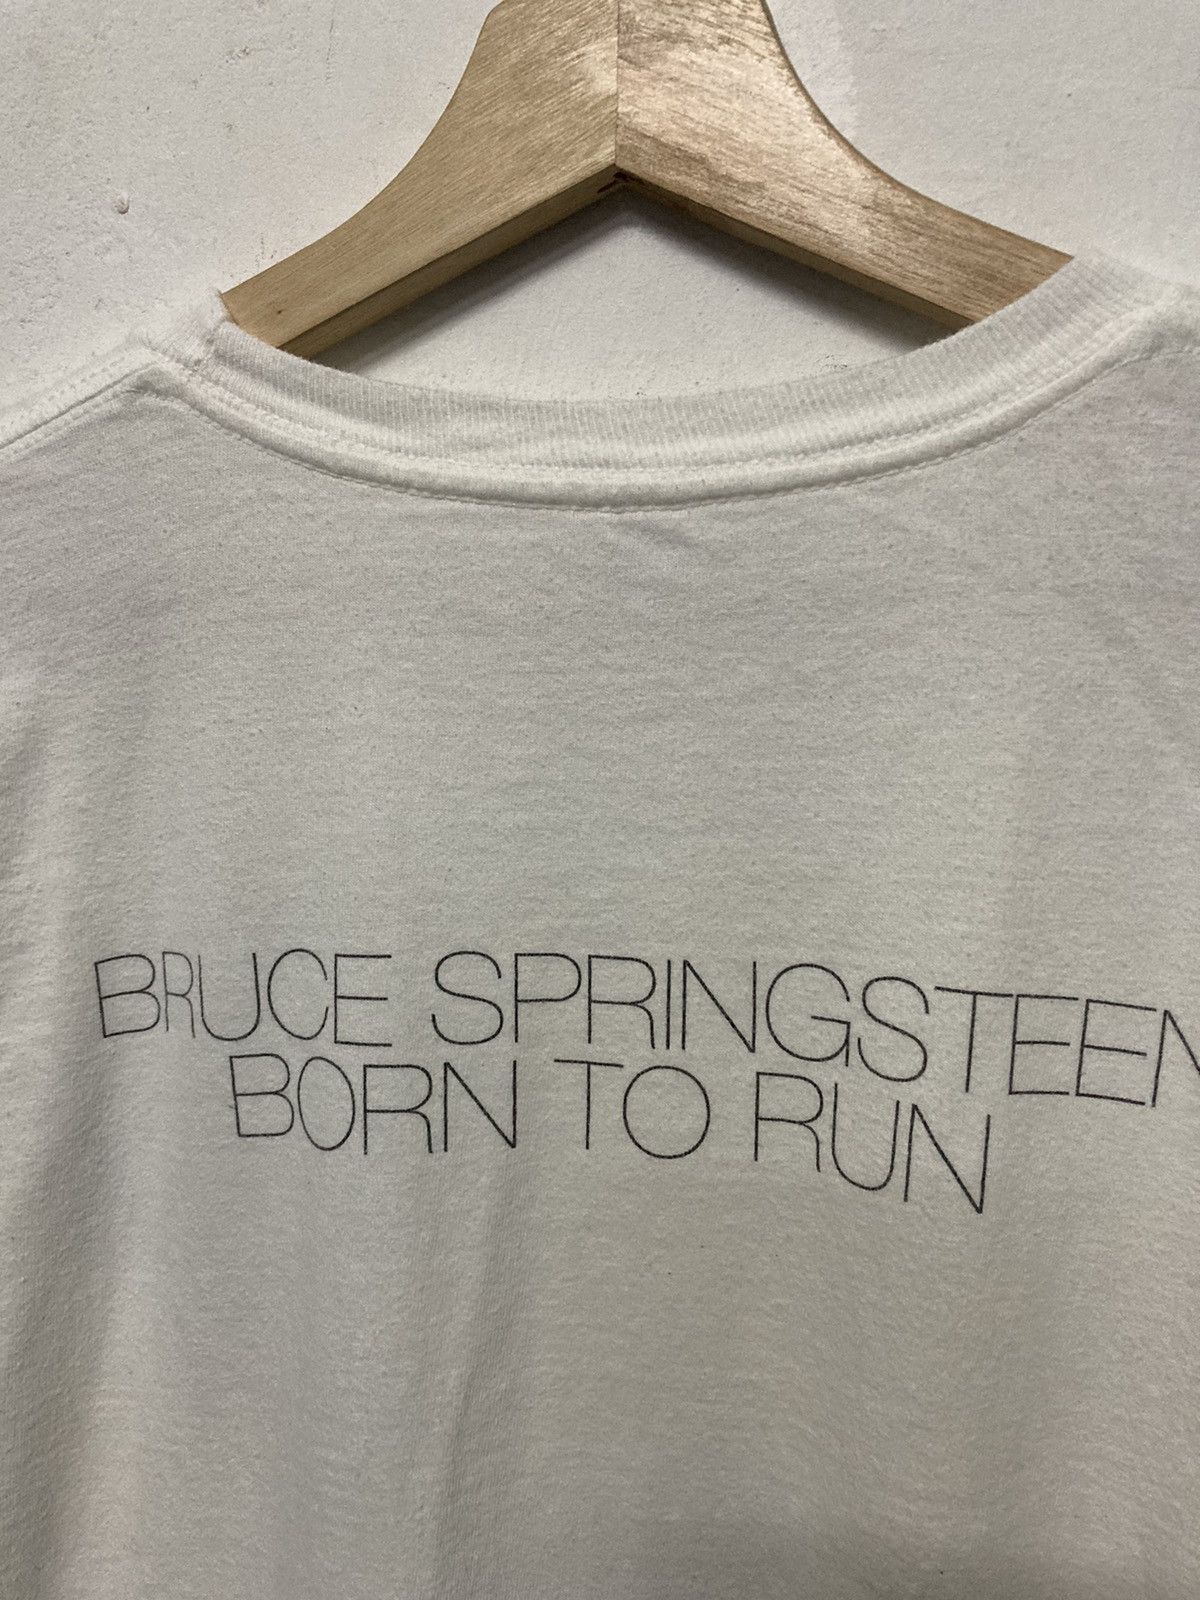 Tour Tee - 2012 Bruce Springsteen Photograph Born to Run Tshirt - 12